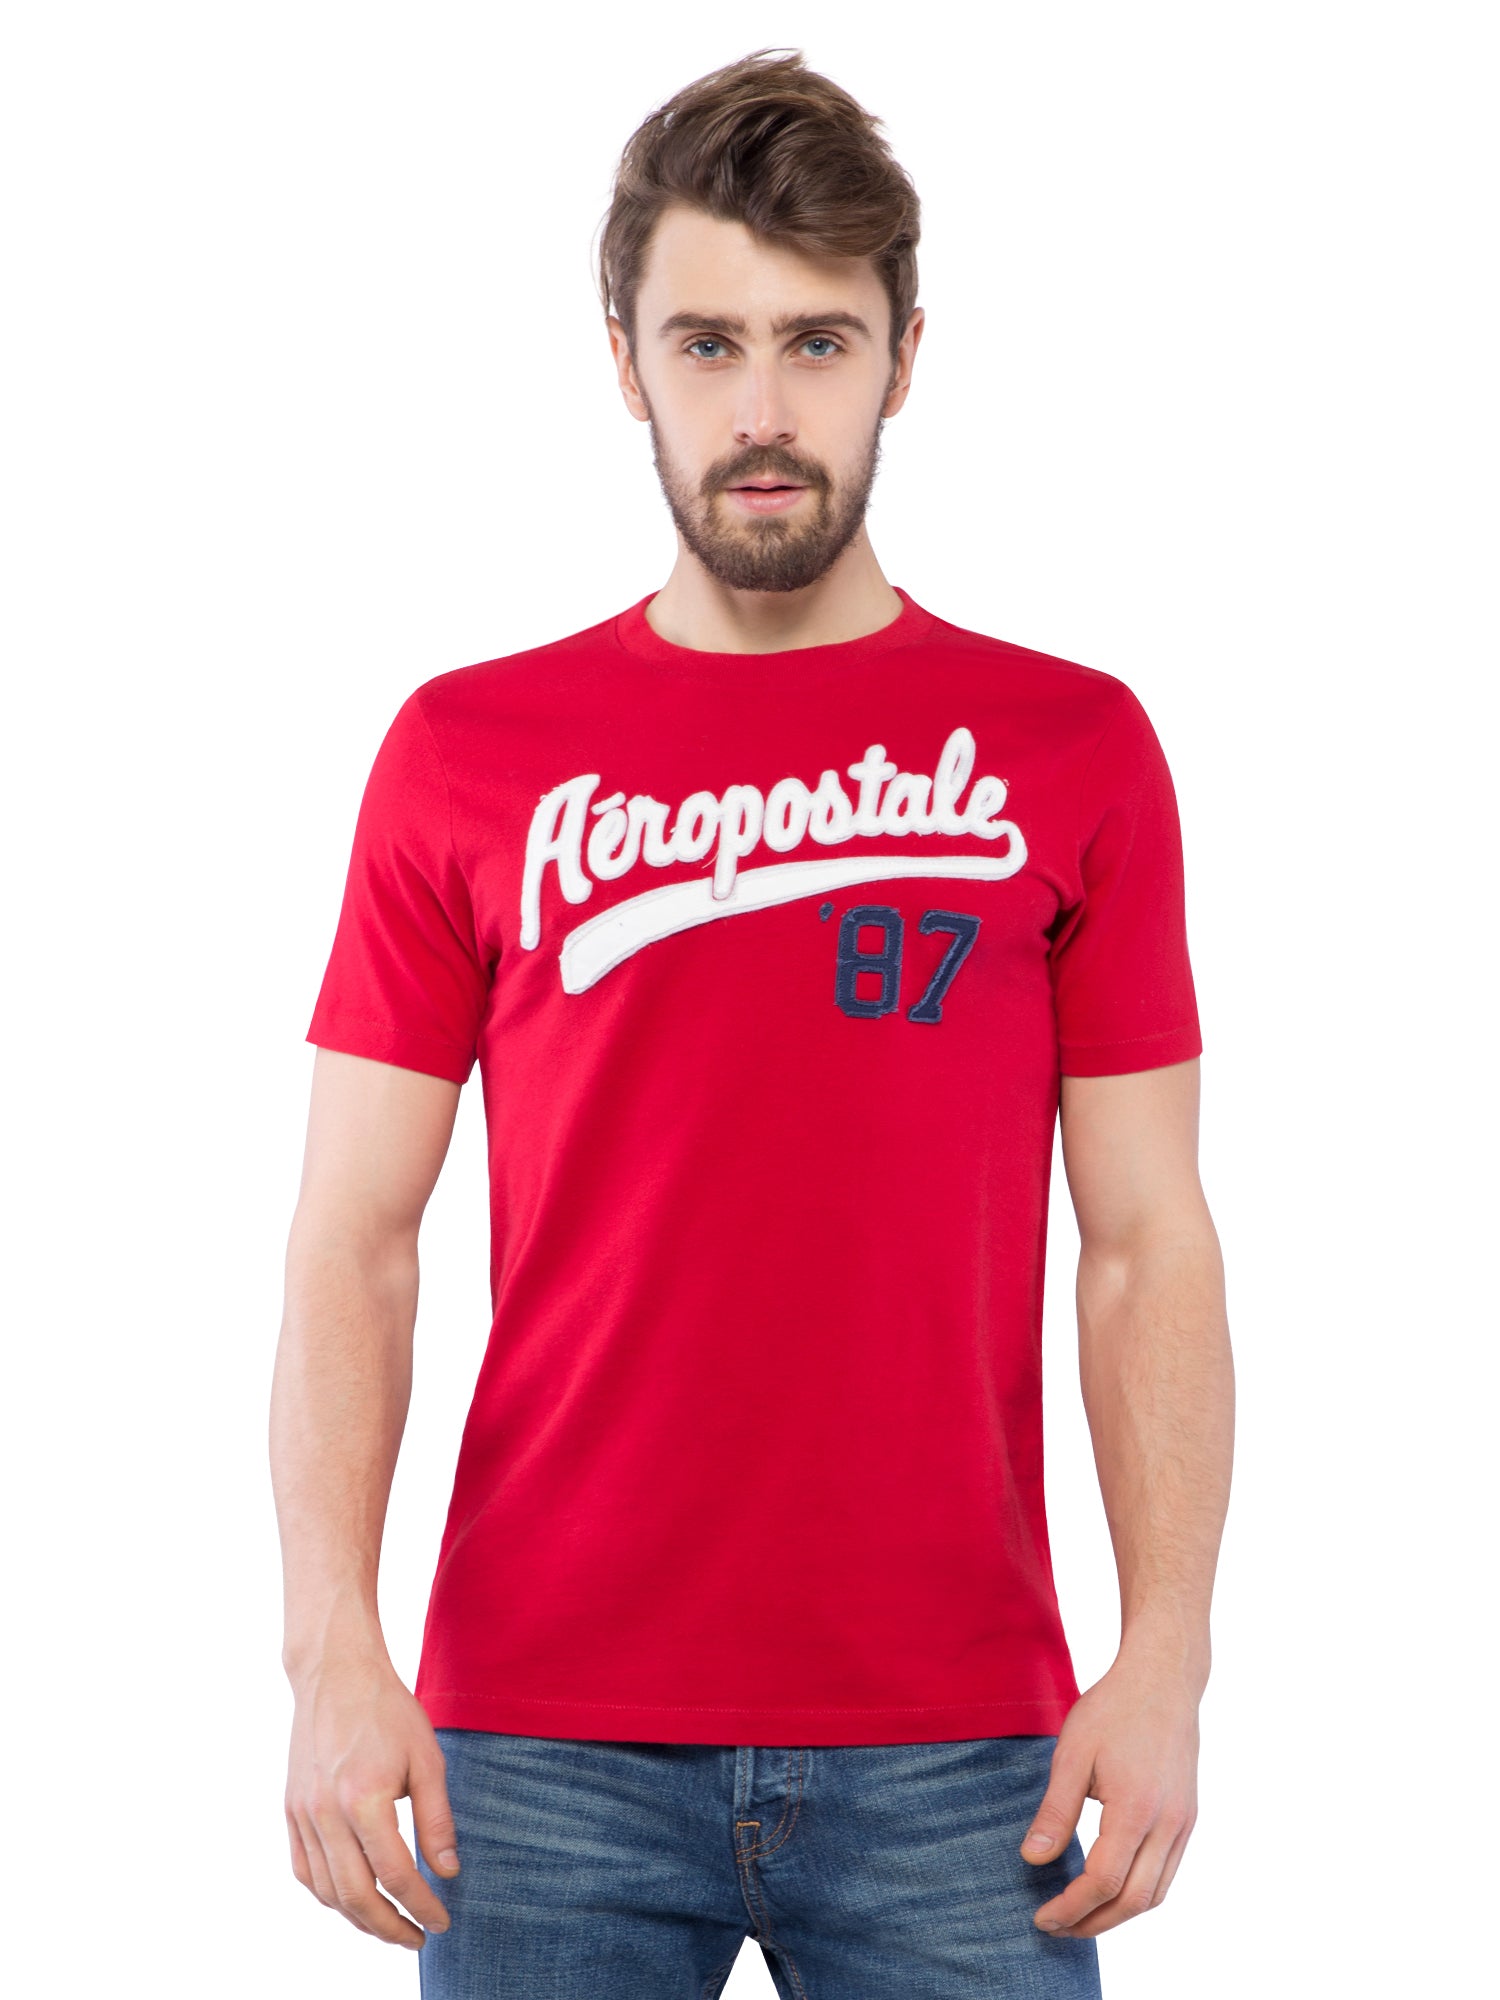 Aeropostale Men Red Crew Neck T-Shirt